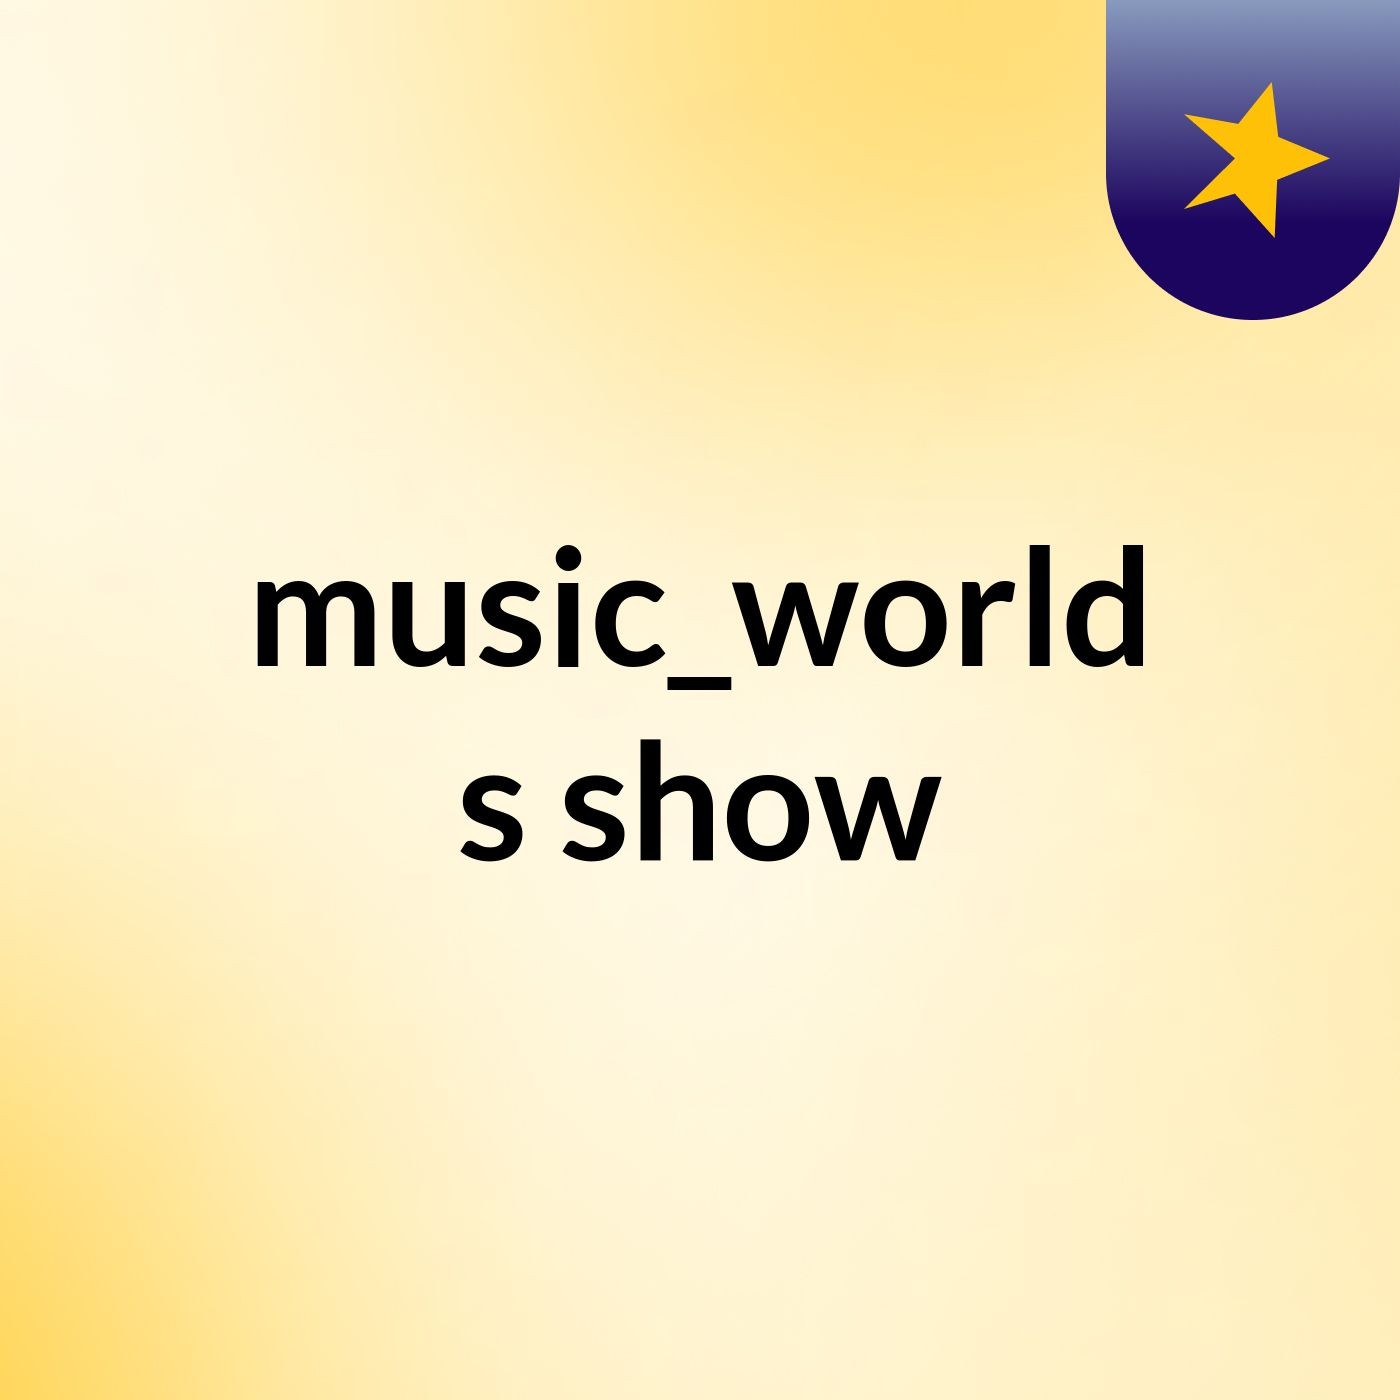 music_world's show